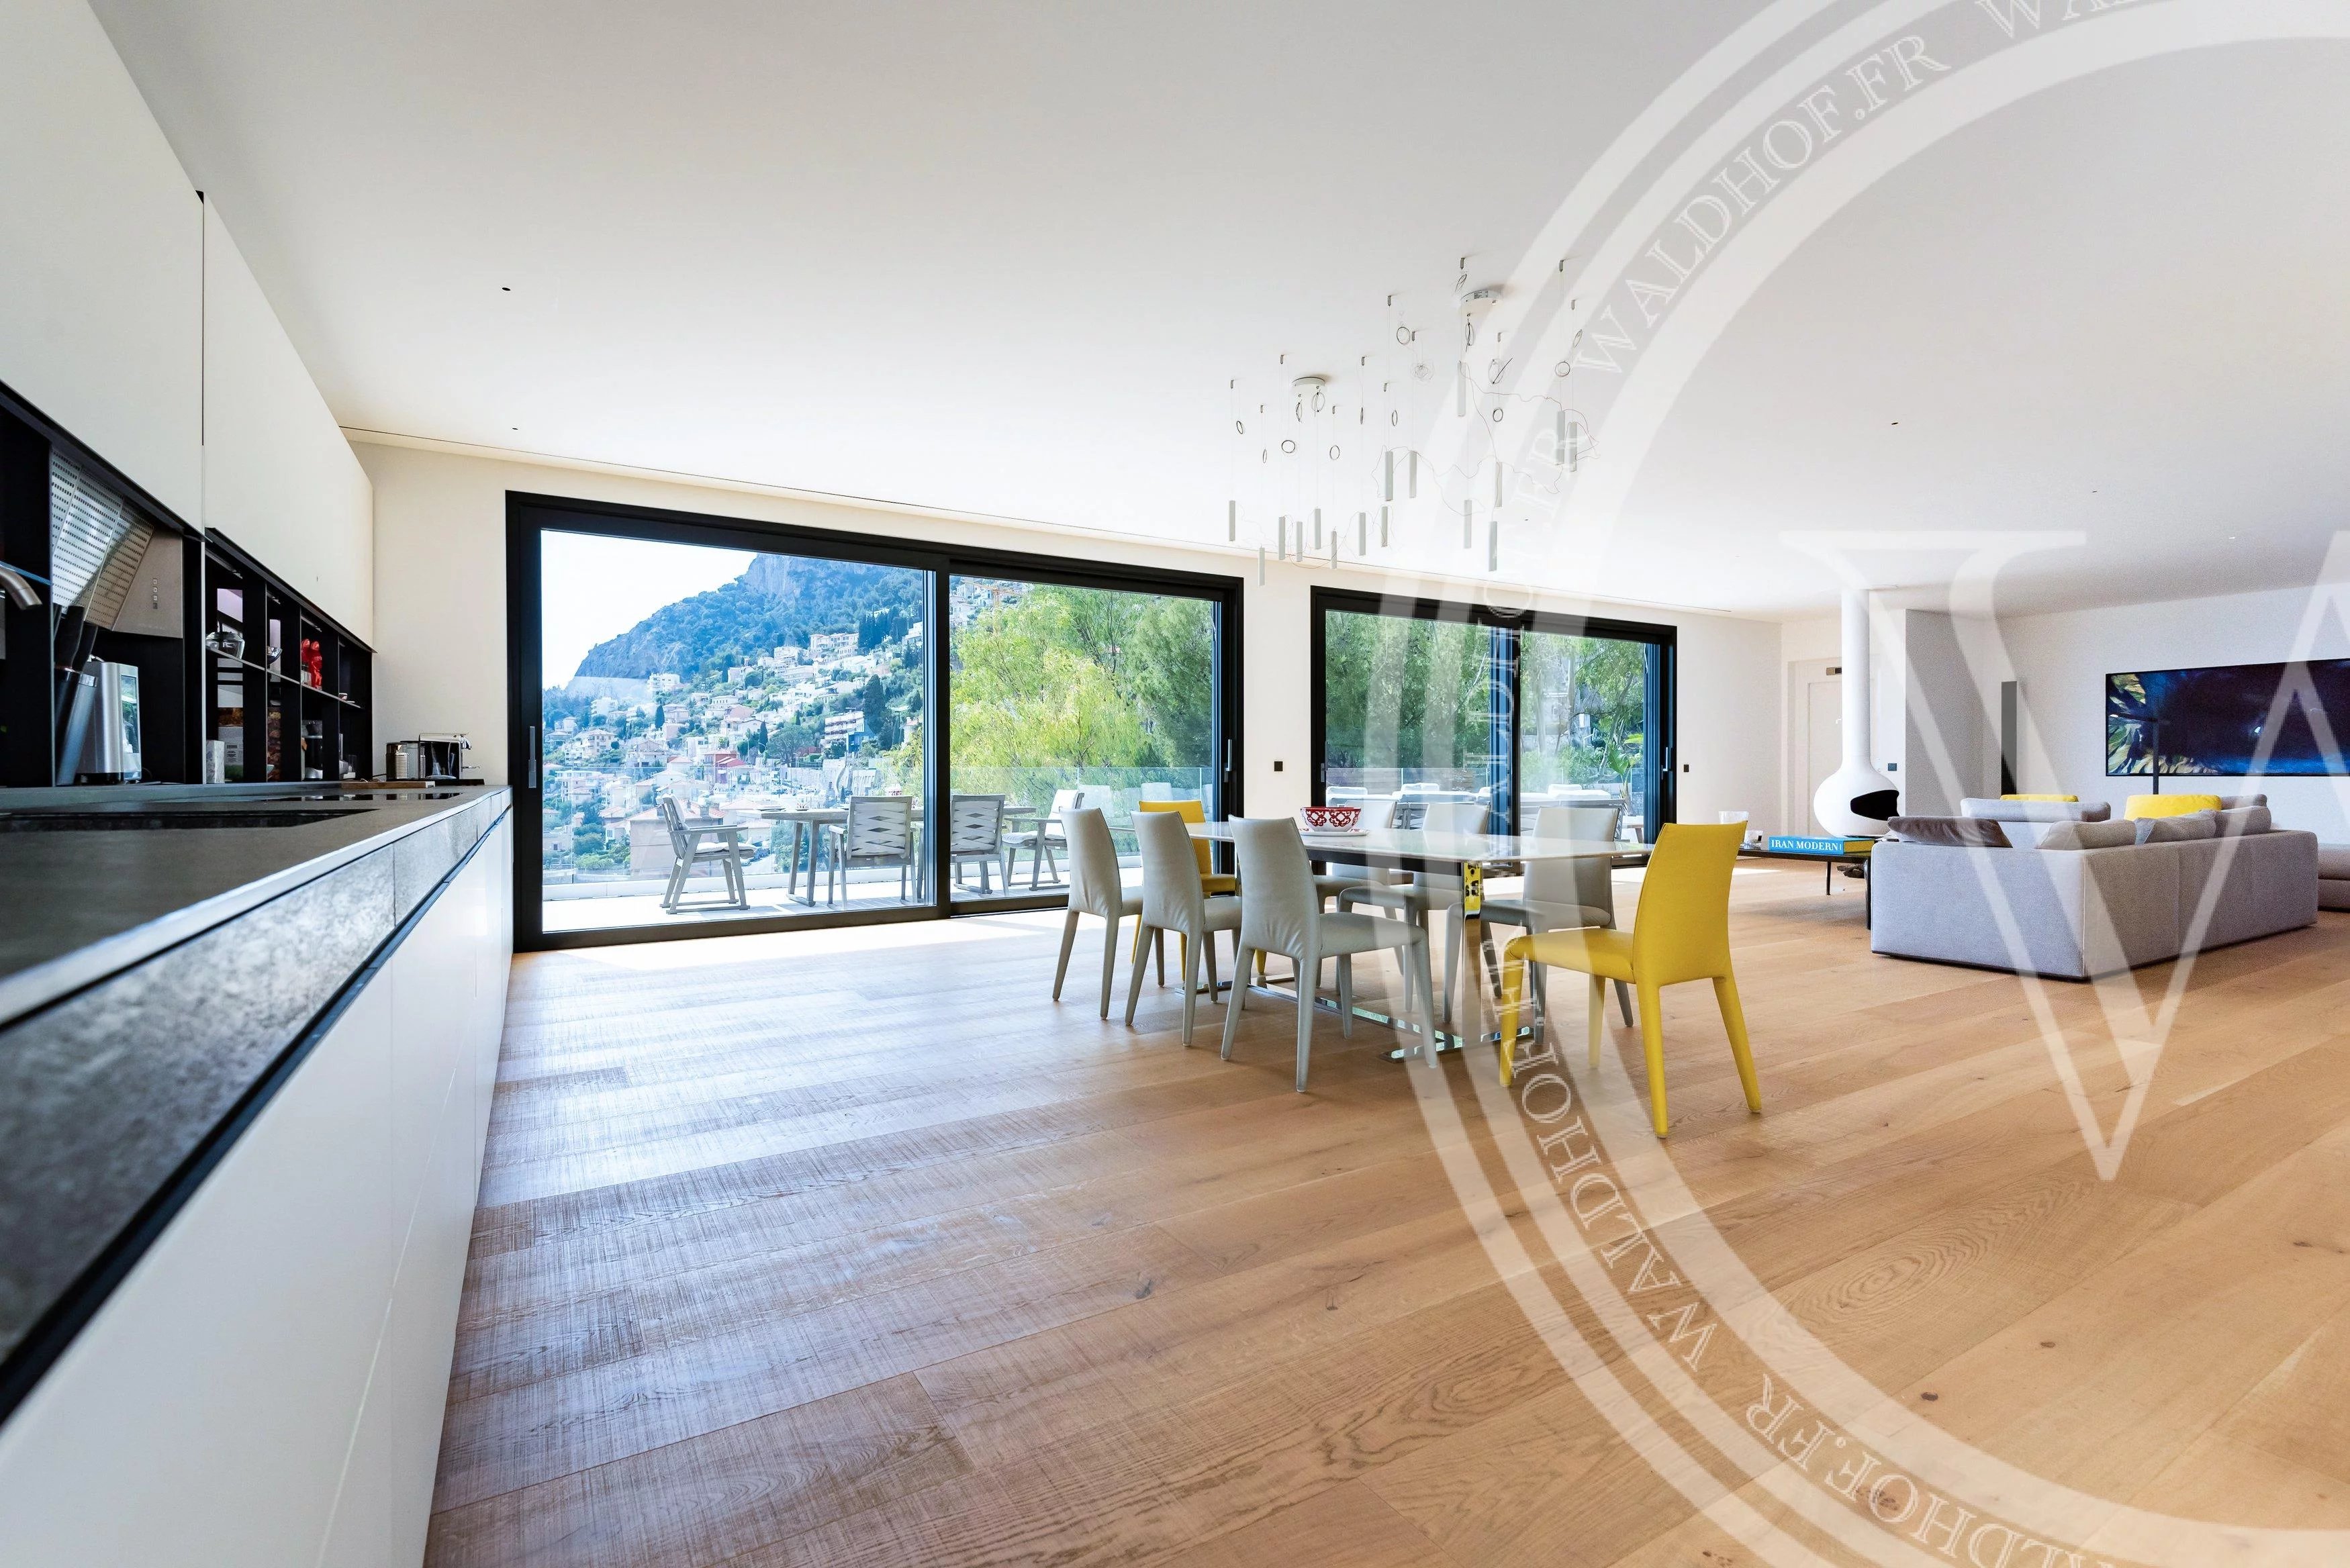 Stunning Modern Villa Boasting a Mesmerizing Sea and Monaco View.